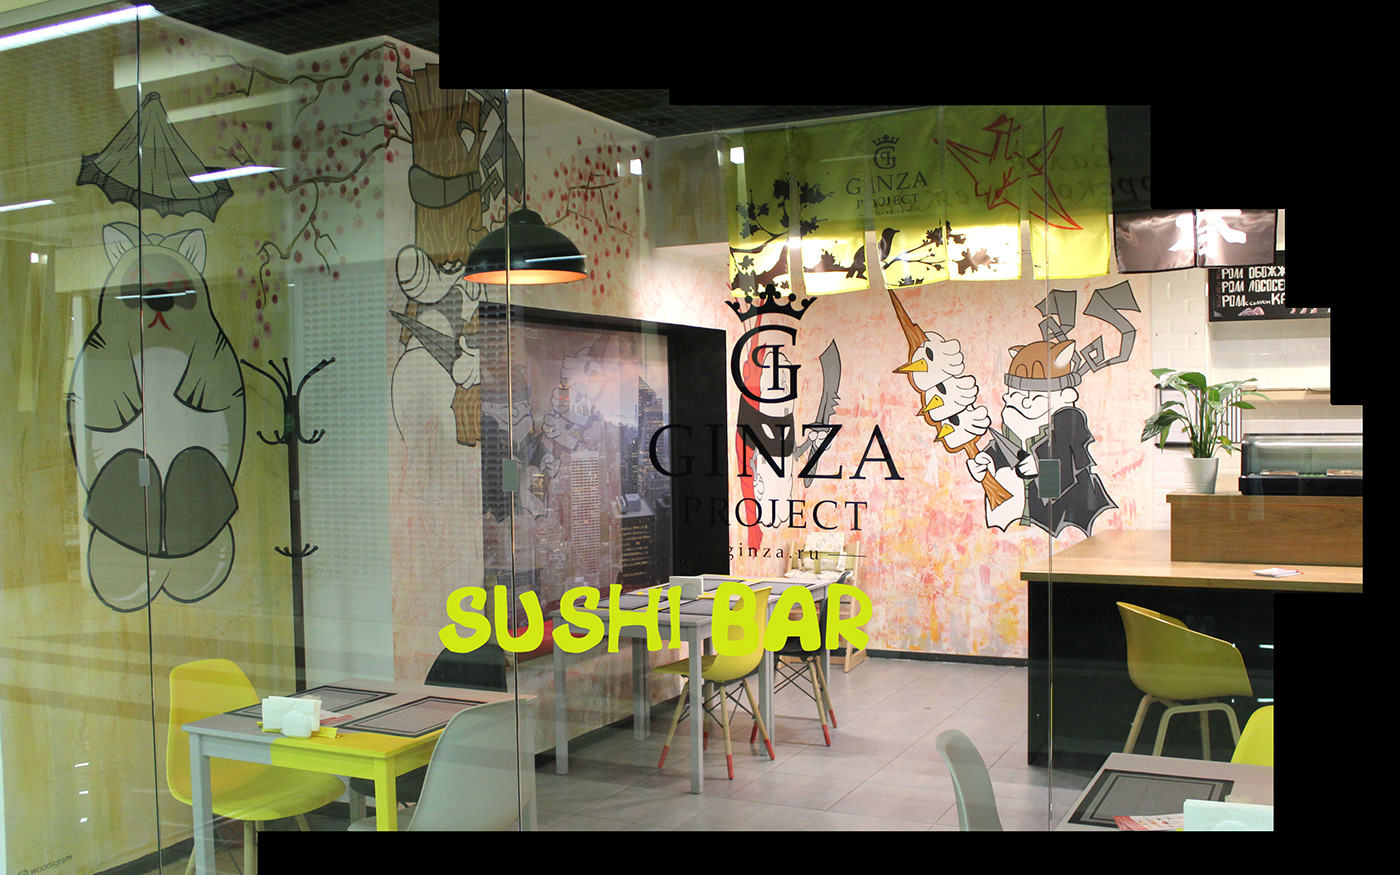 sushi bar woodigram Graffiti art japan